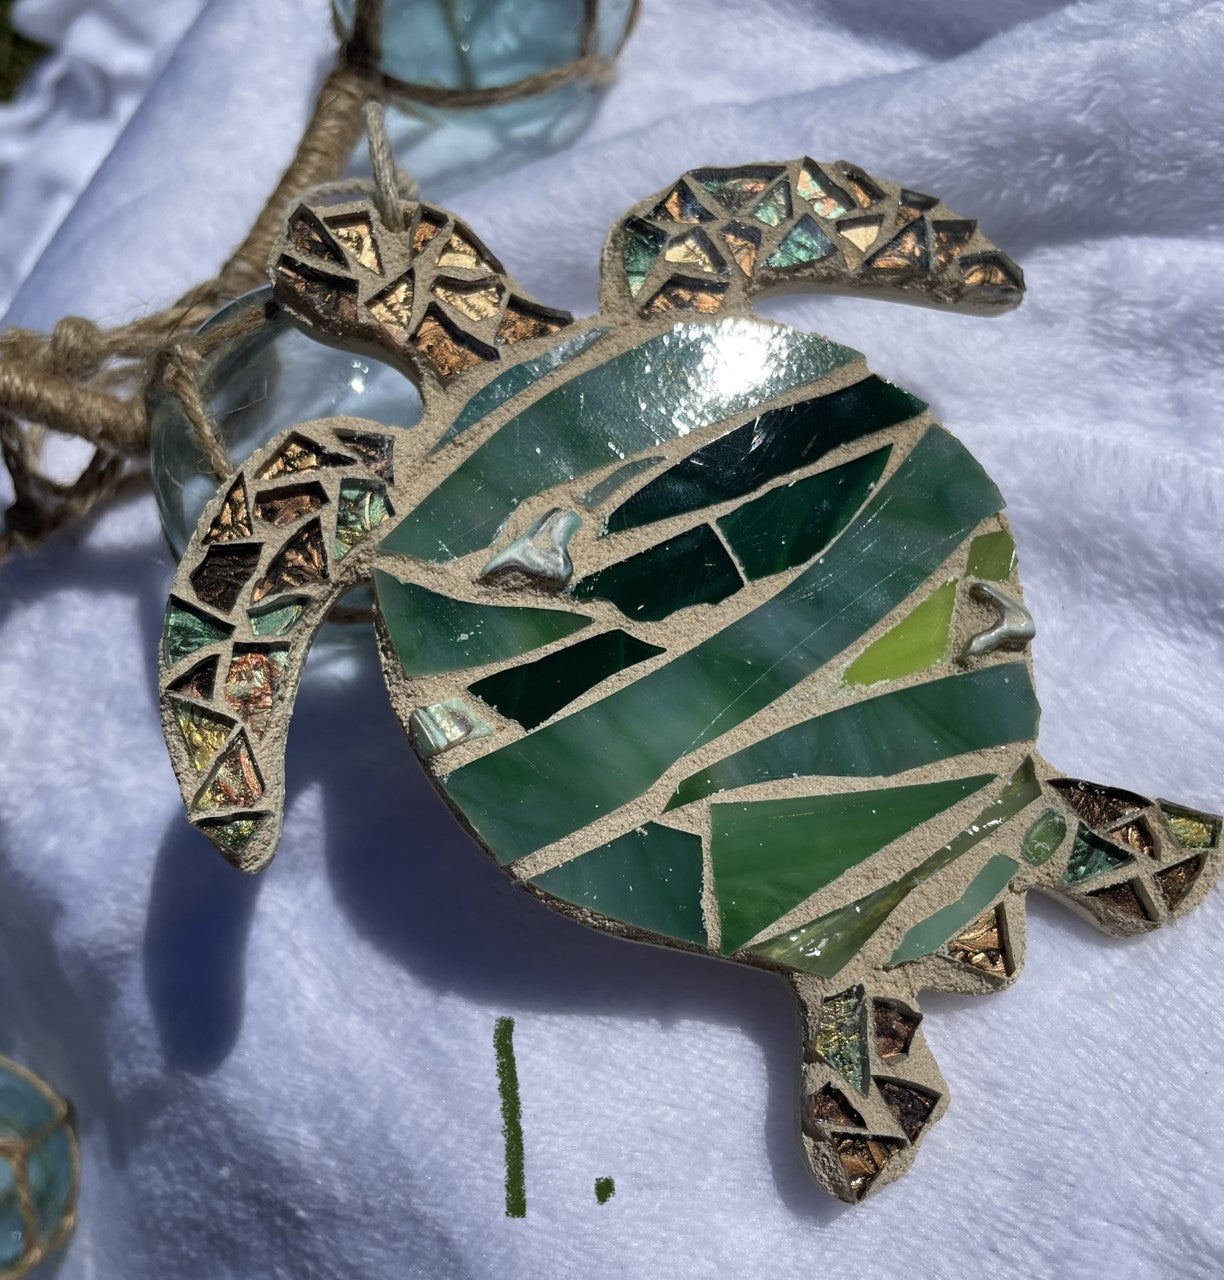 Green sea turtle glass/bead mosaic ornaments